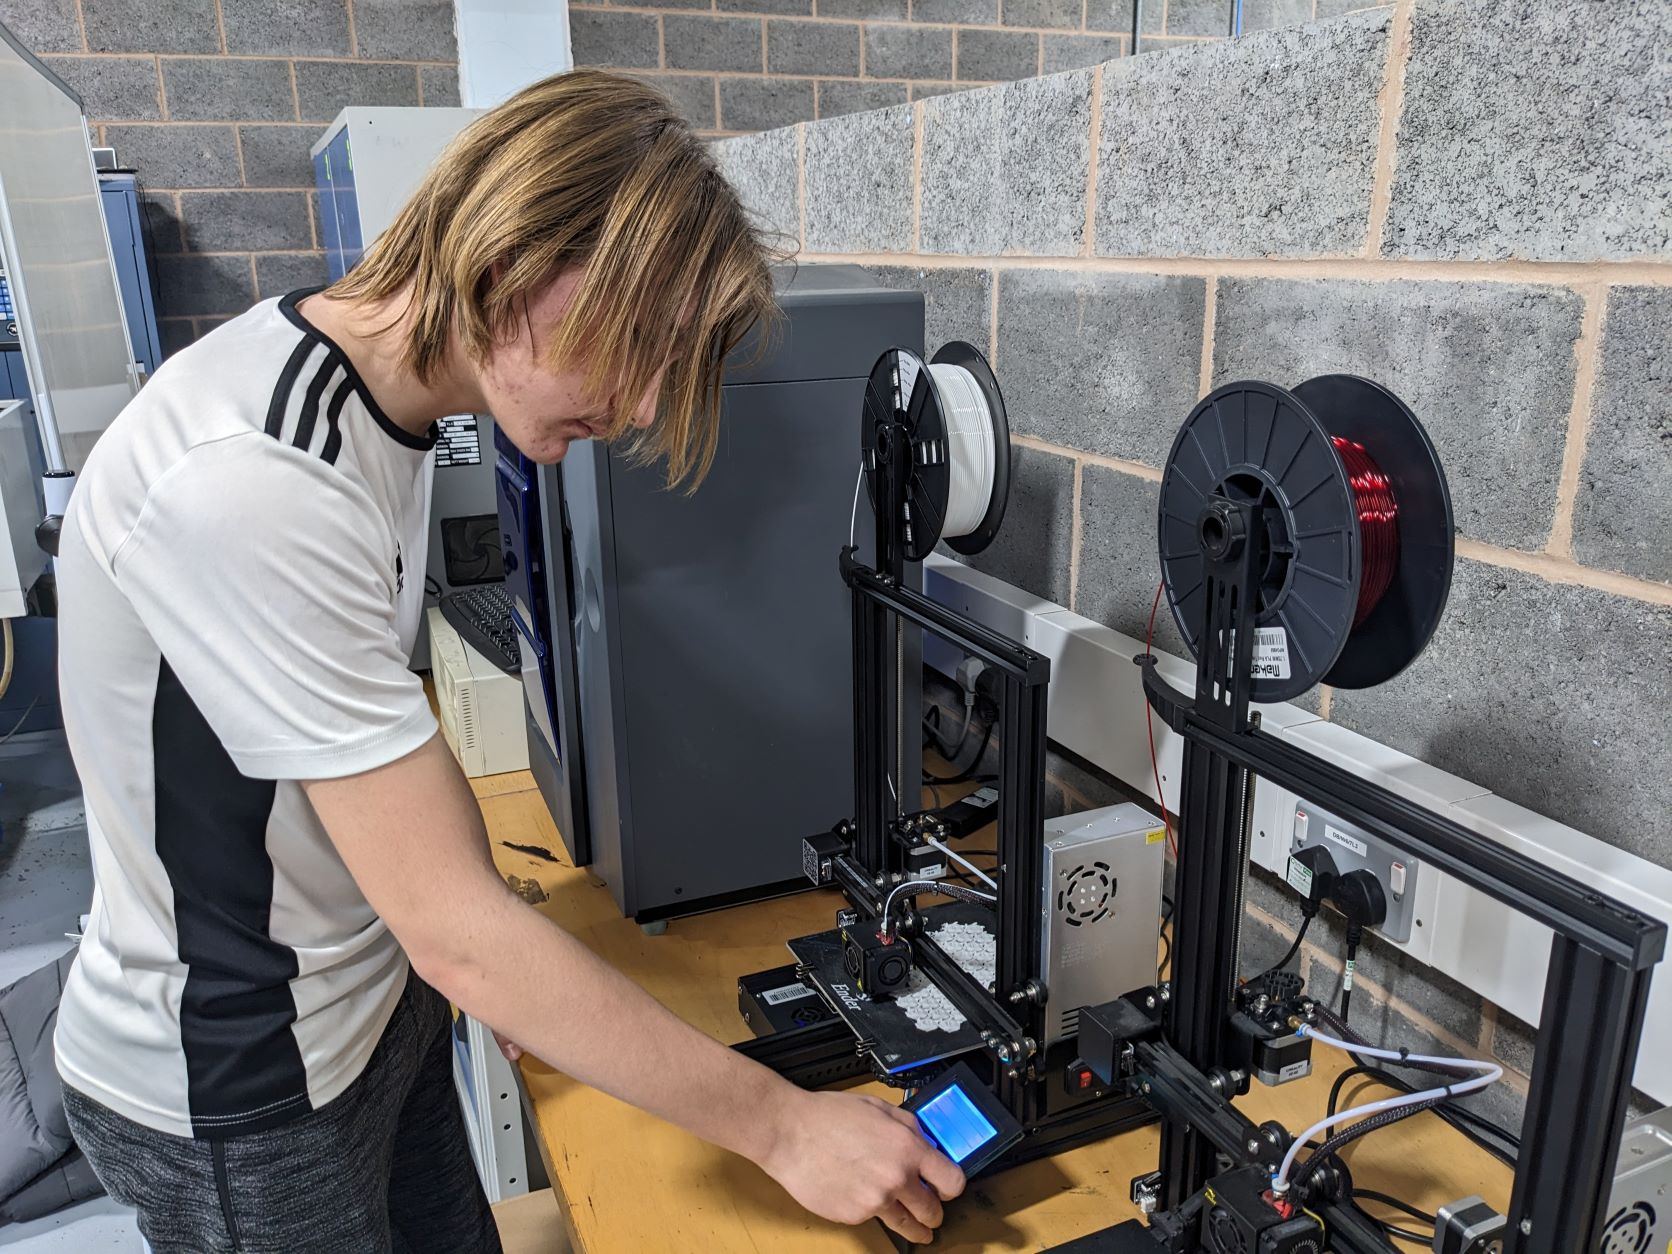 Student uses new 3D printer